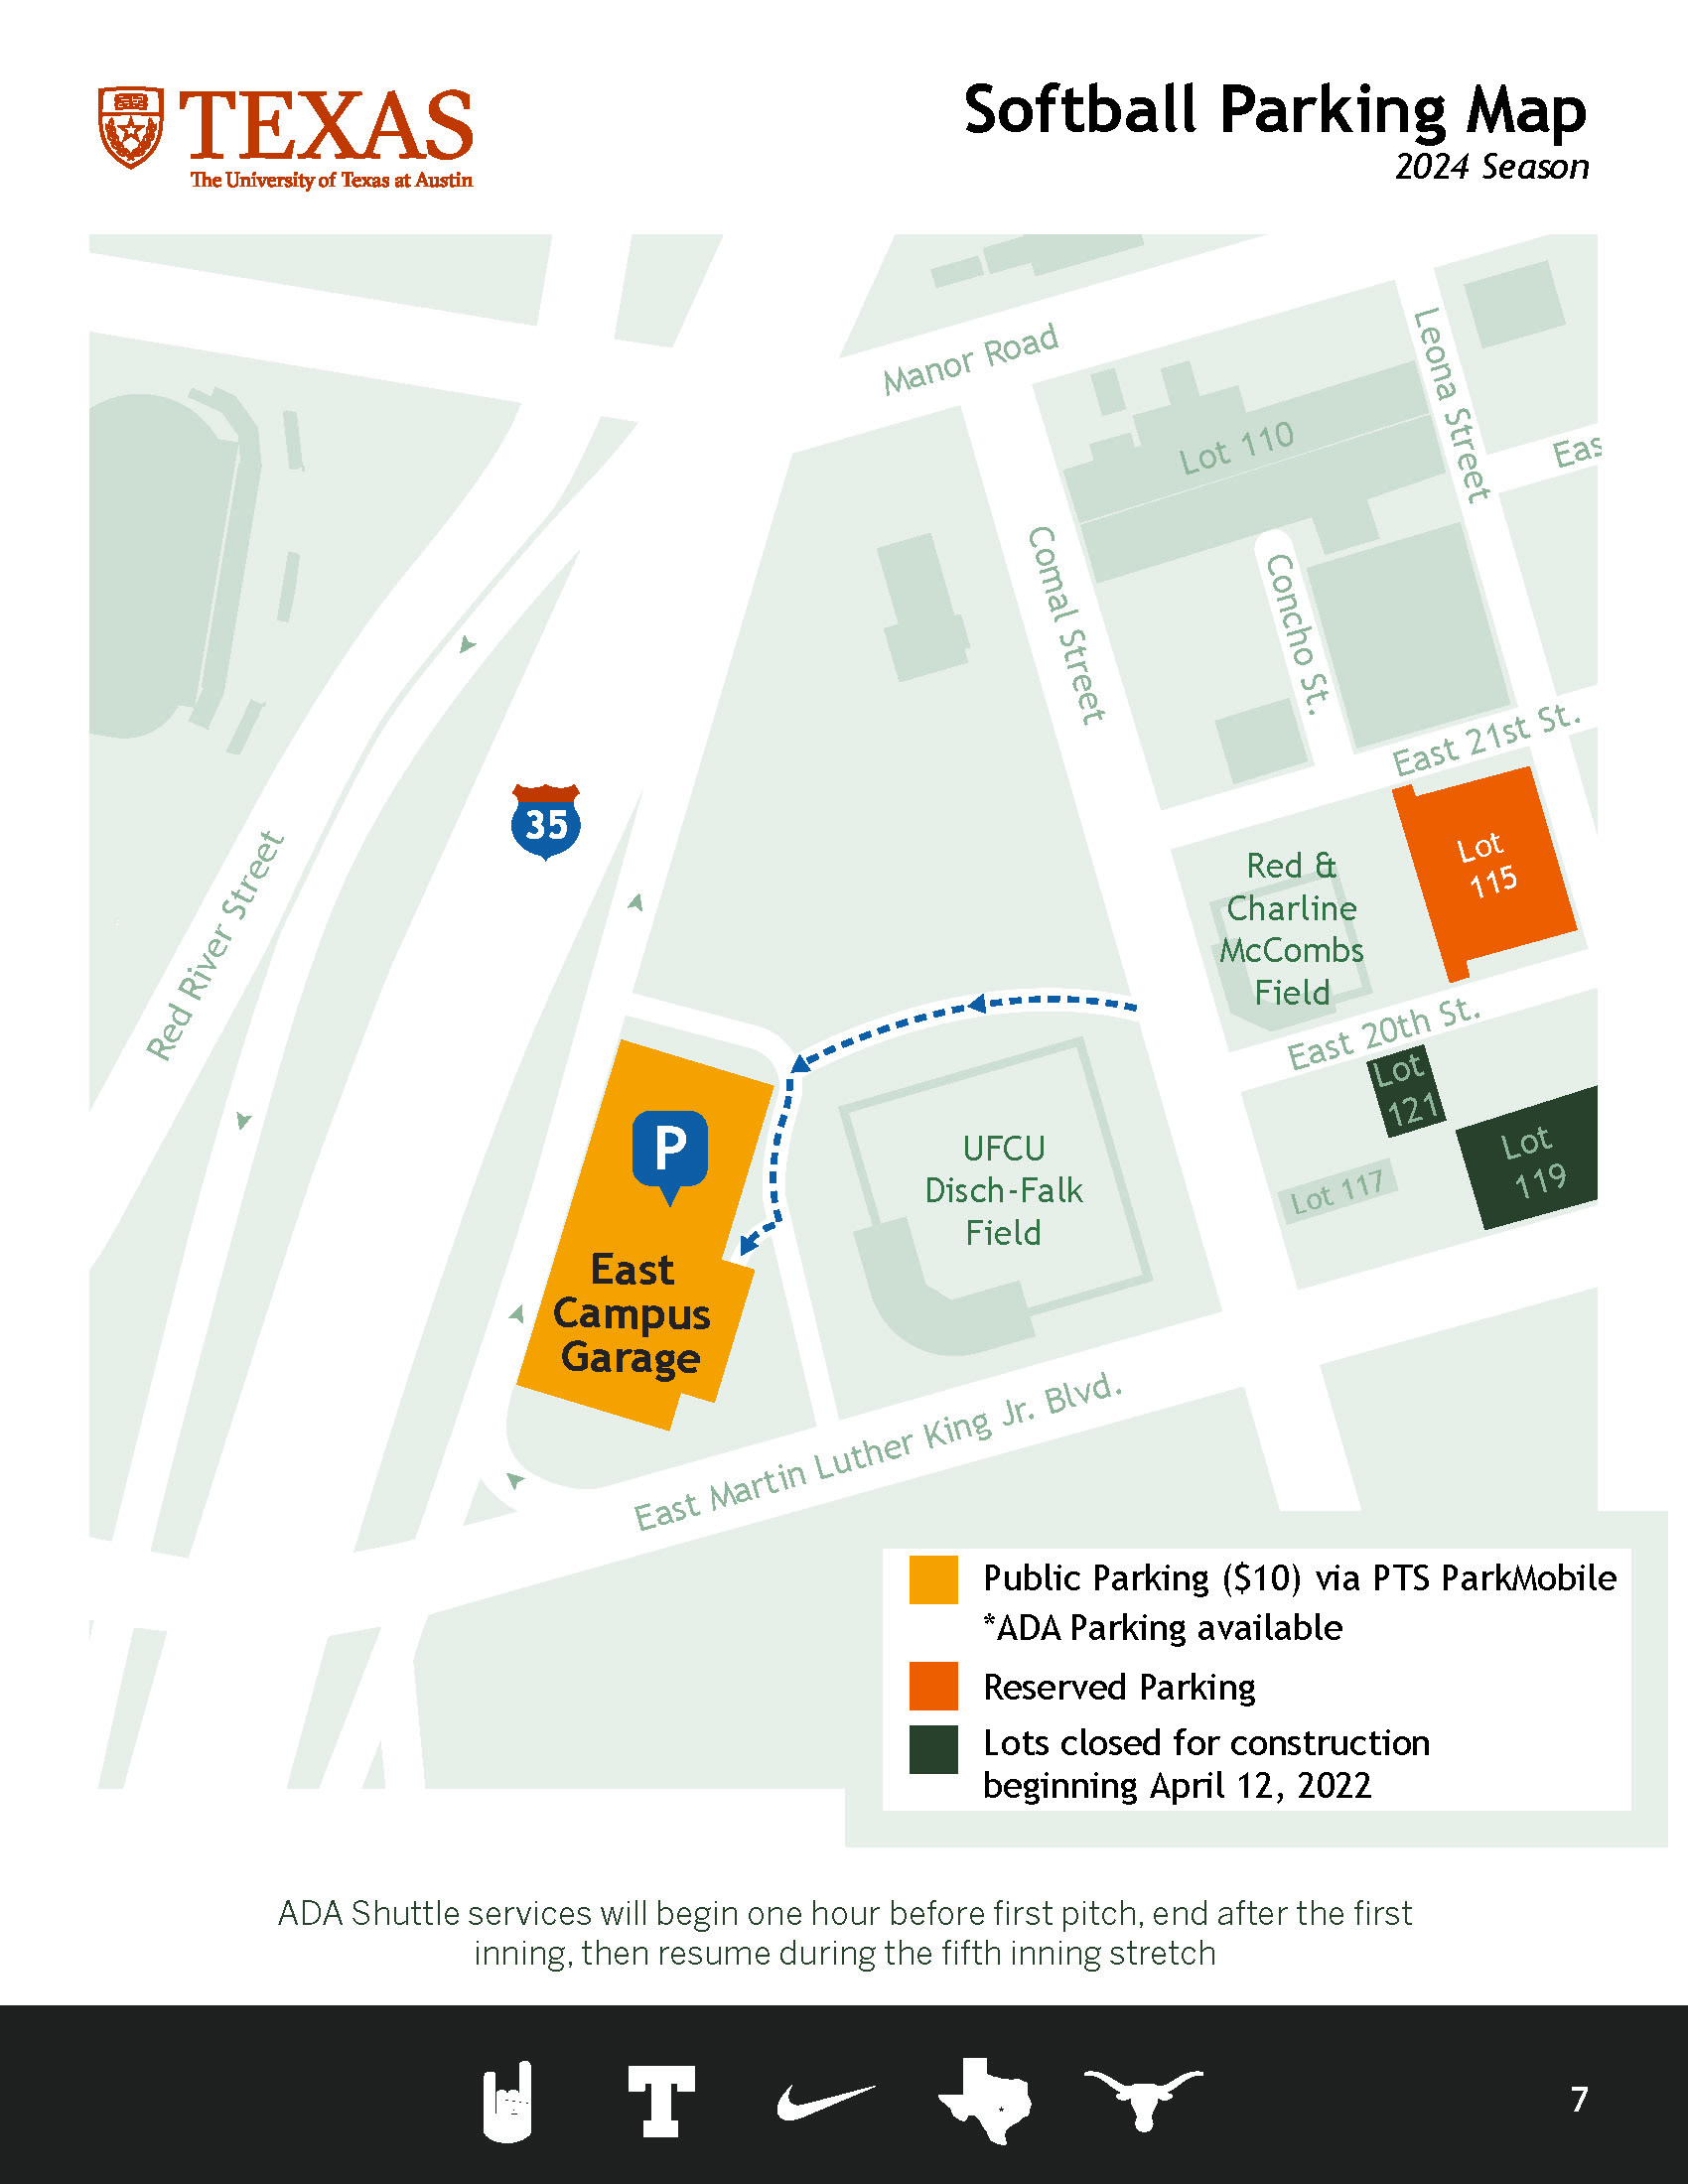 Softball parking map Showing East Campus Garage